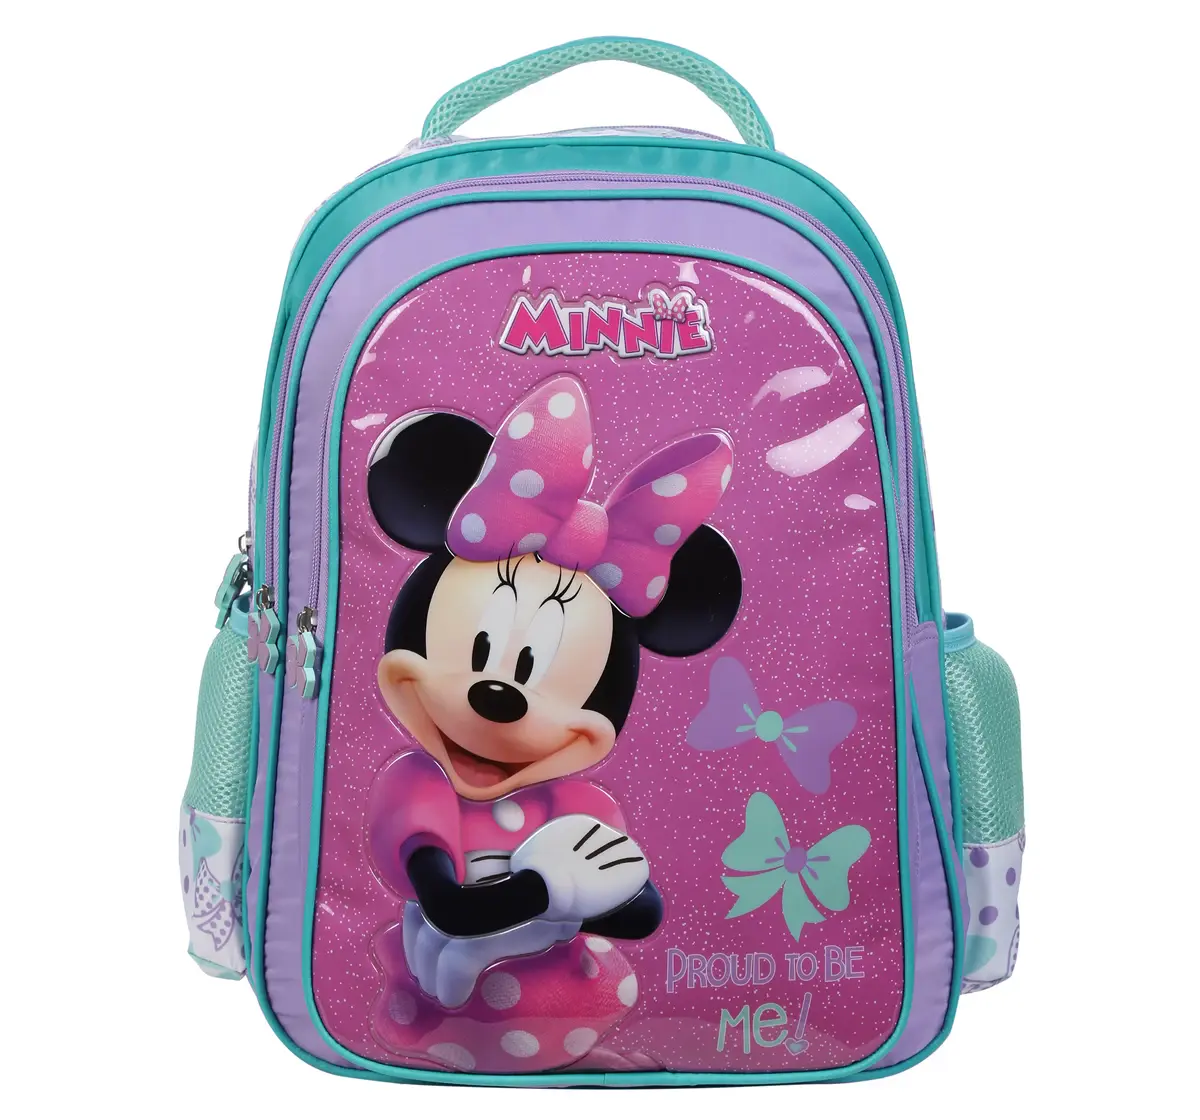 Simba Minnie Imaginative 14 Backpack Multicolor 3Y+